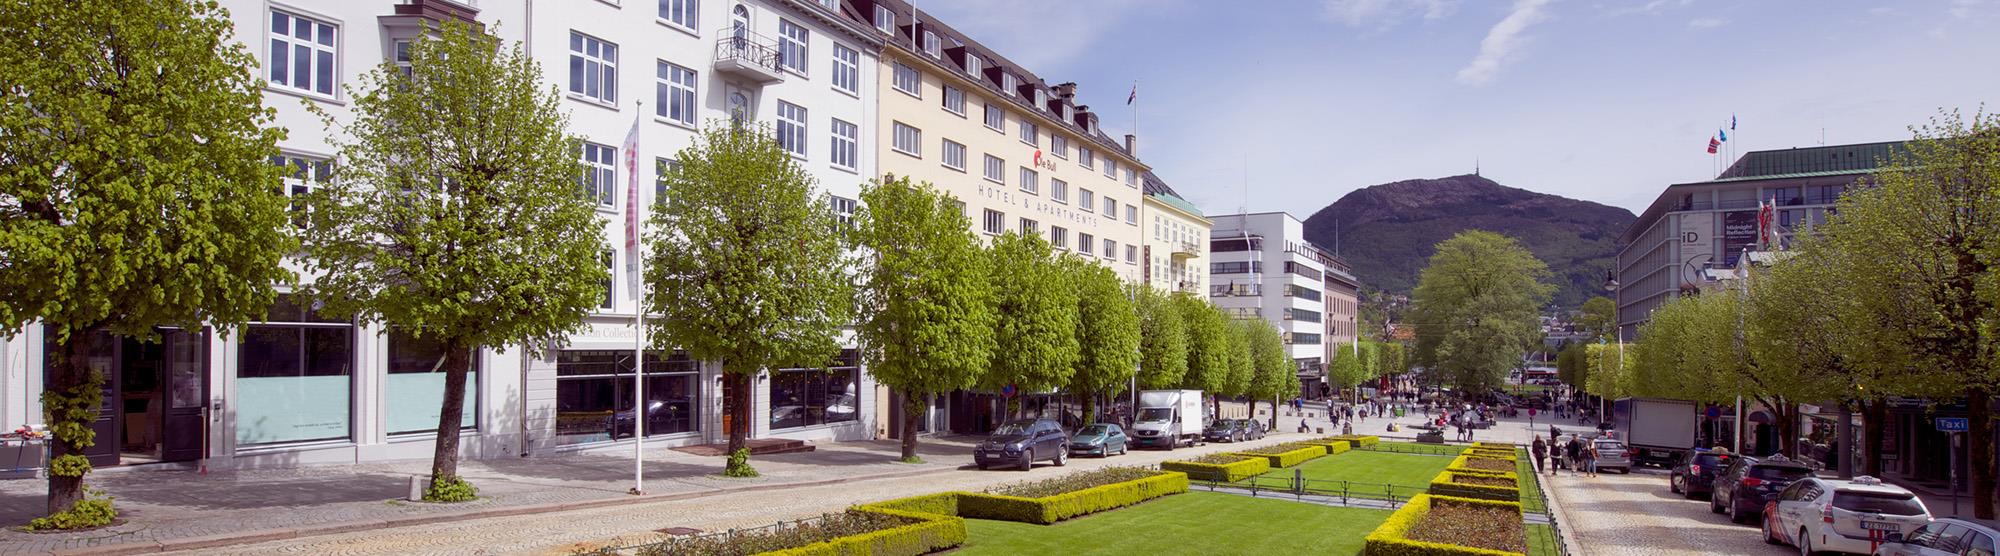 Hotels in Bergen city center